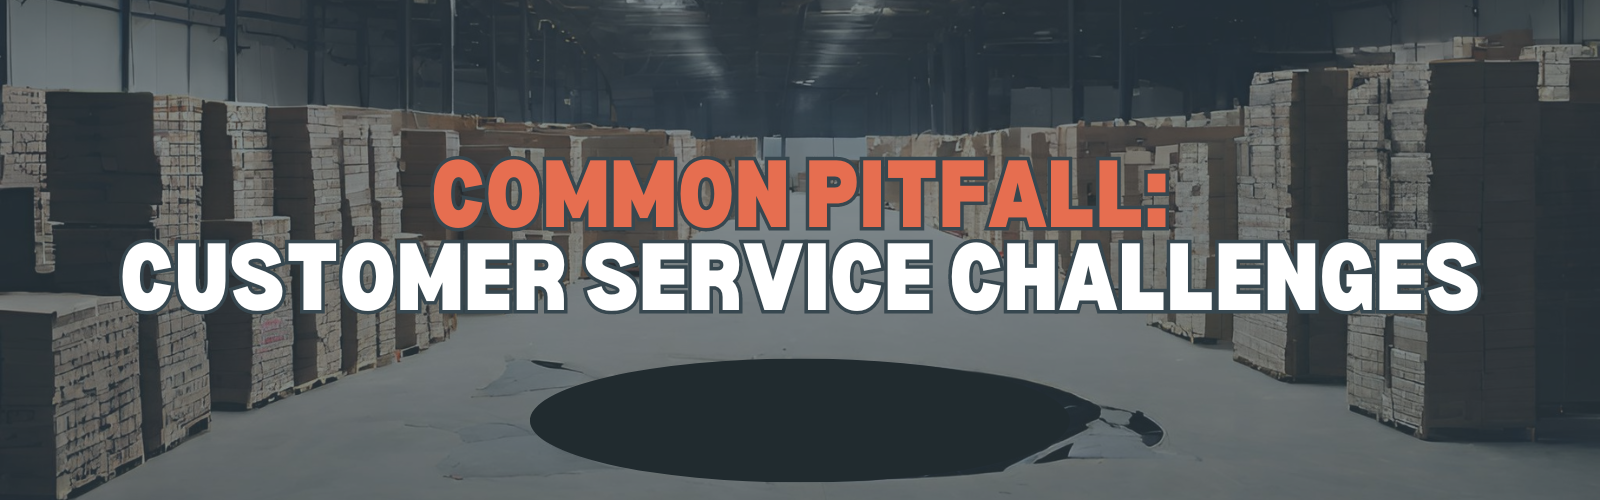 Amazon FBA - Common Pitfall - Customer Service Challenges for Amazon Sellers